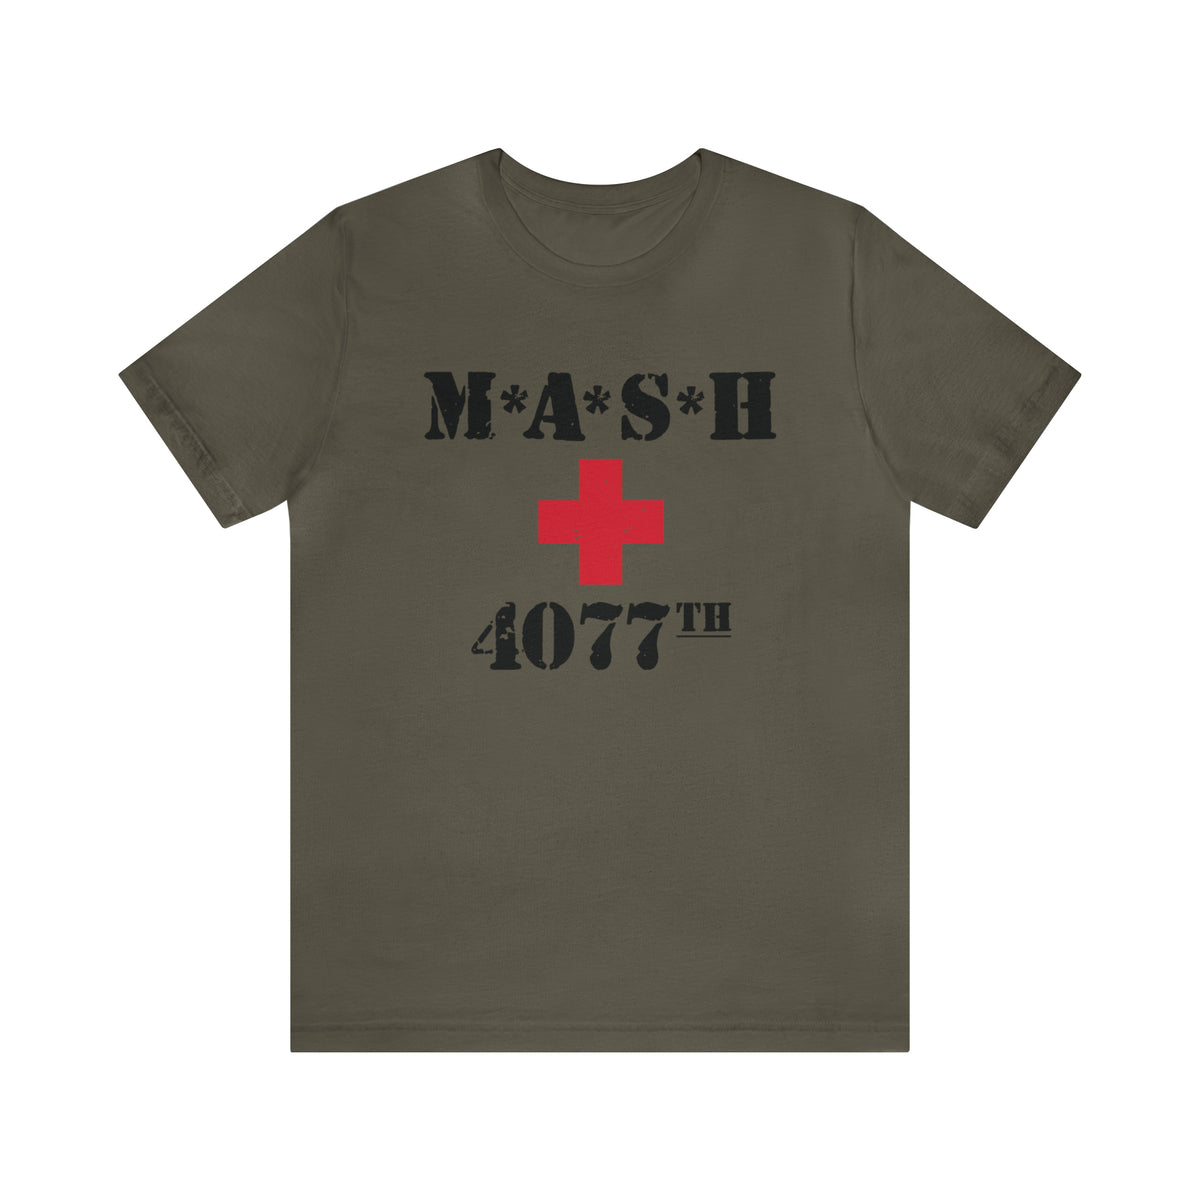 MASH 4077th Division TV Show Retro Shirt | Korean War Vintage T-shirt | Unisex Jersey T-shirt